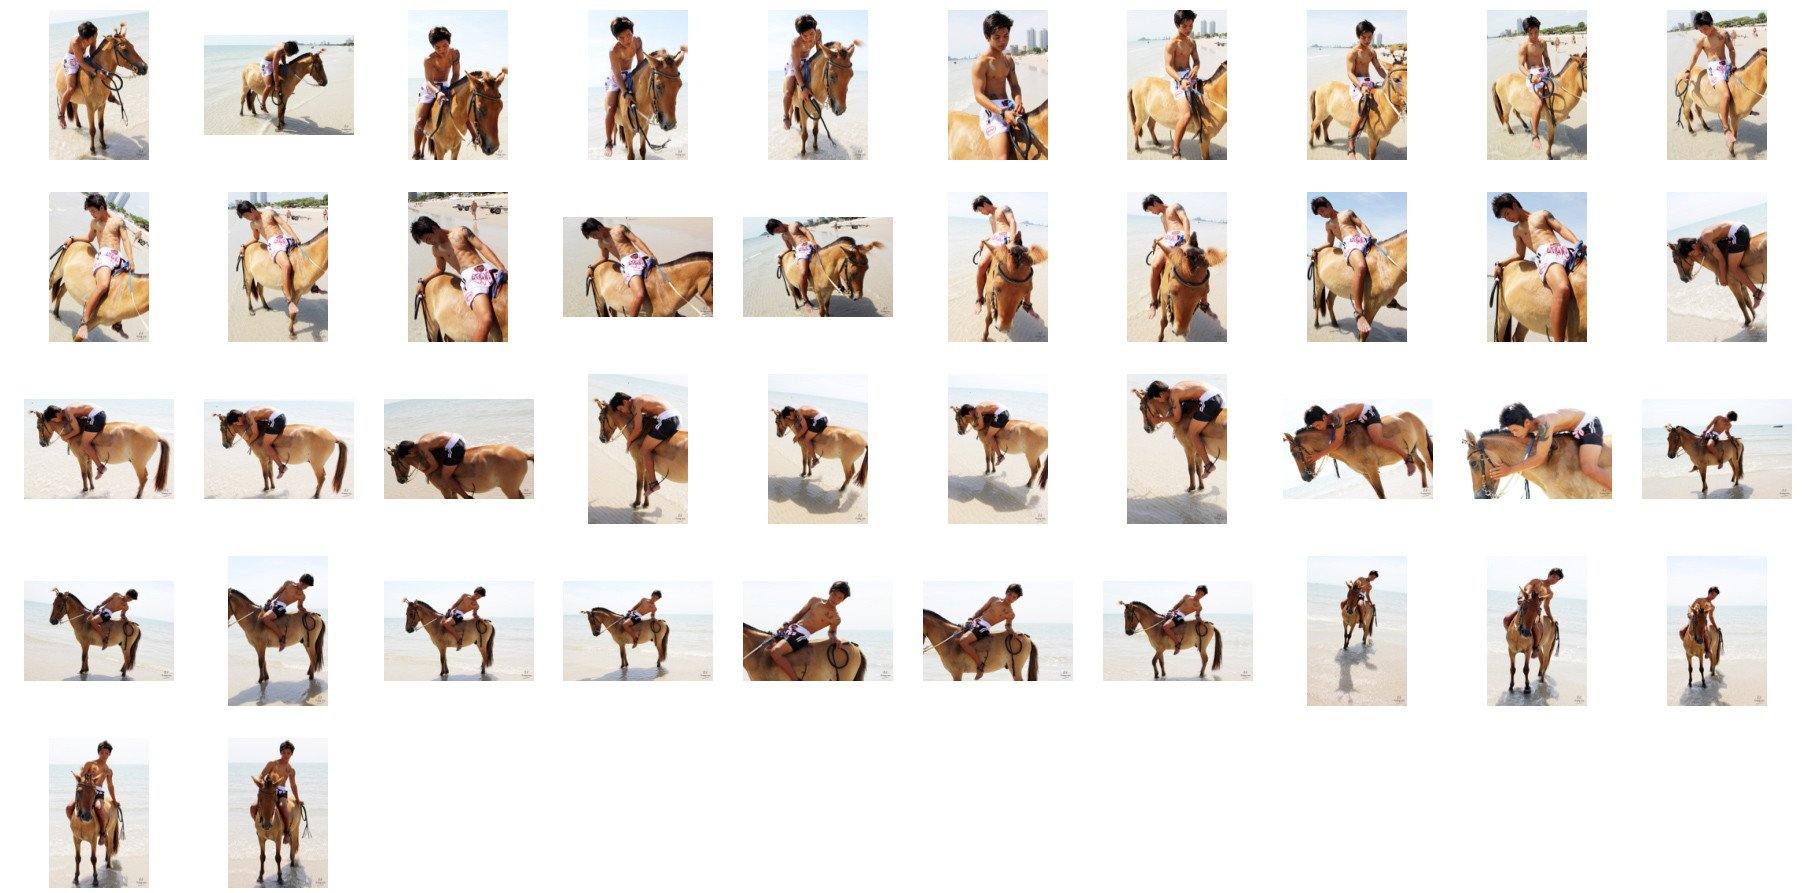 David in Thaibox Shorts Riding Bareback on Golden Pony, Part 2 - Riding.Vision